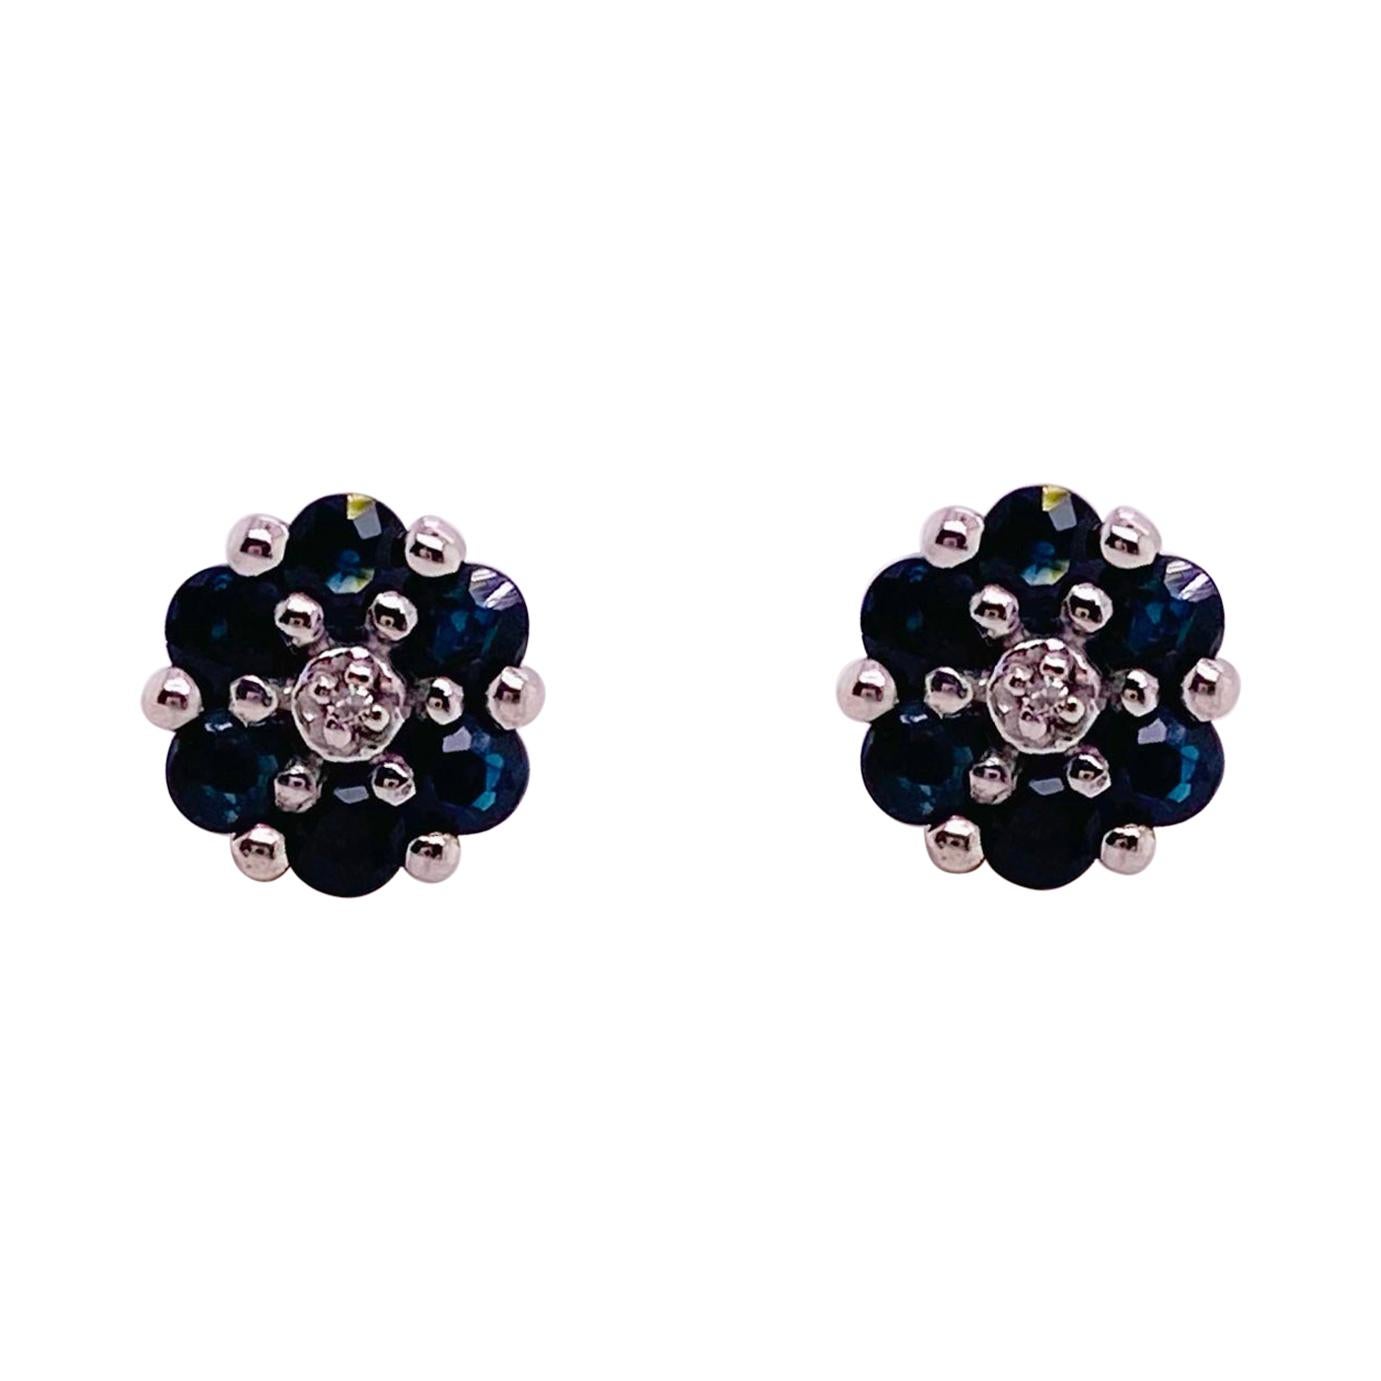 Sapphire Flower Earrings with Diamonds in Center, Blue Sapphire Cluster Earrings